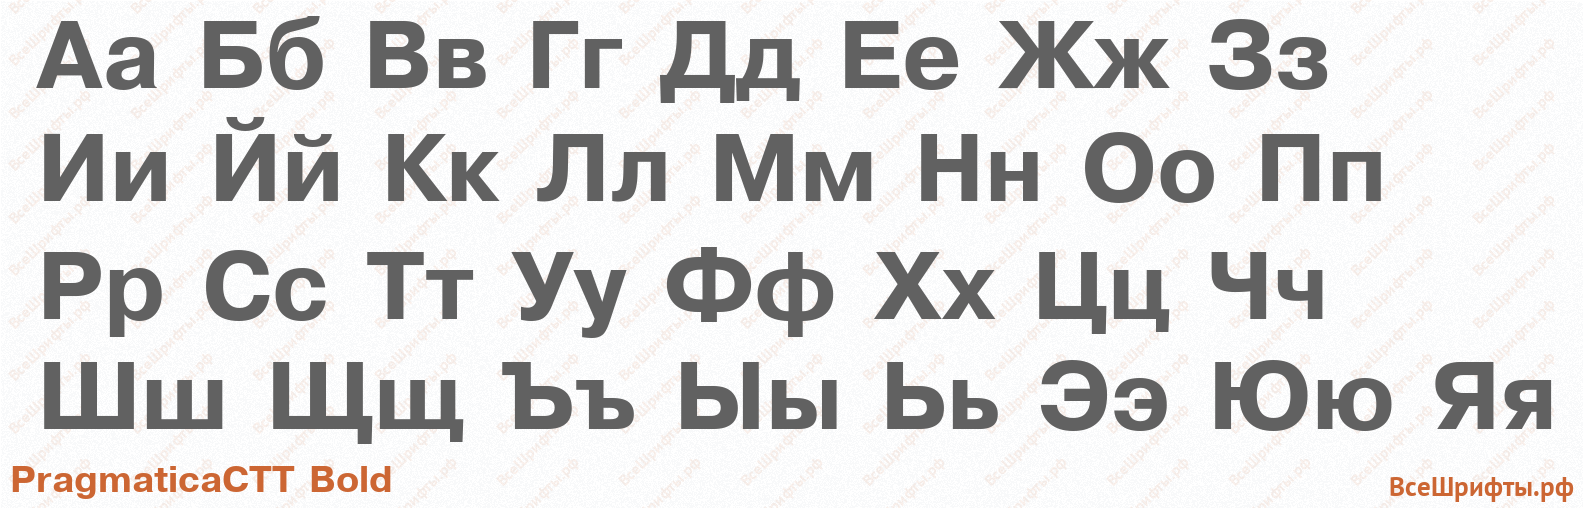 Шрифт PragmaticaCTT Bold с русскими буквами